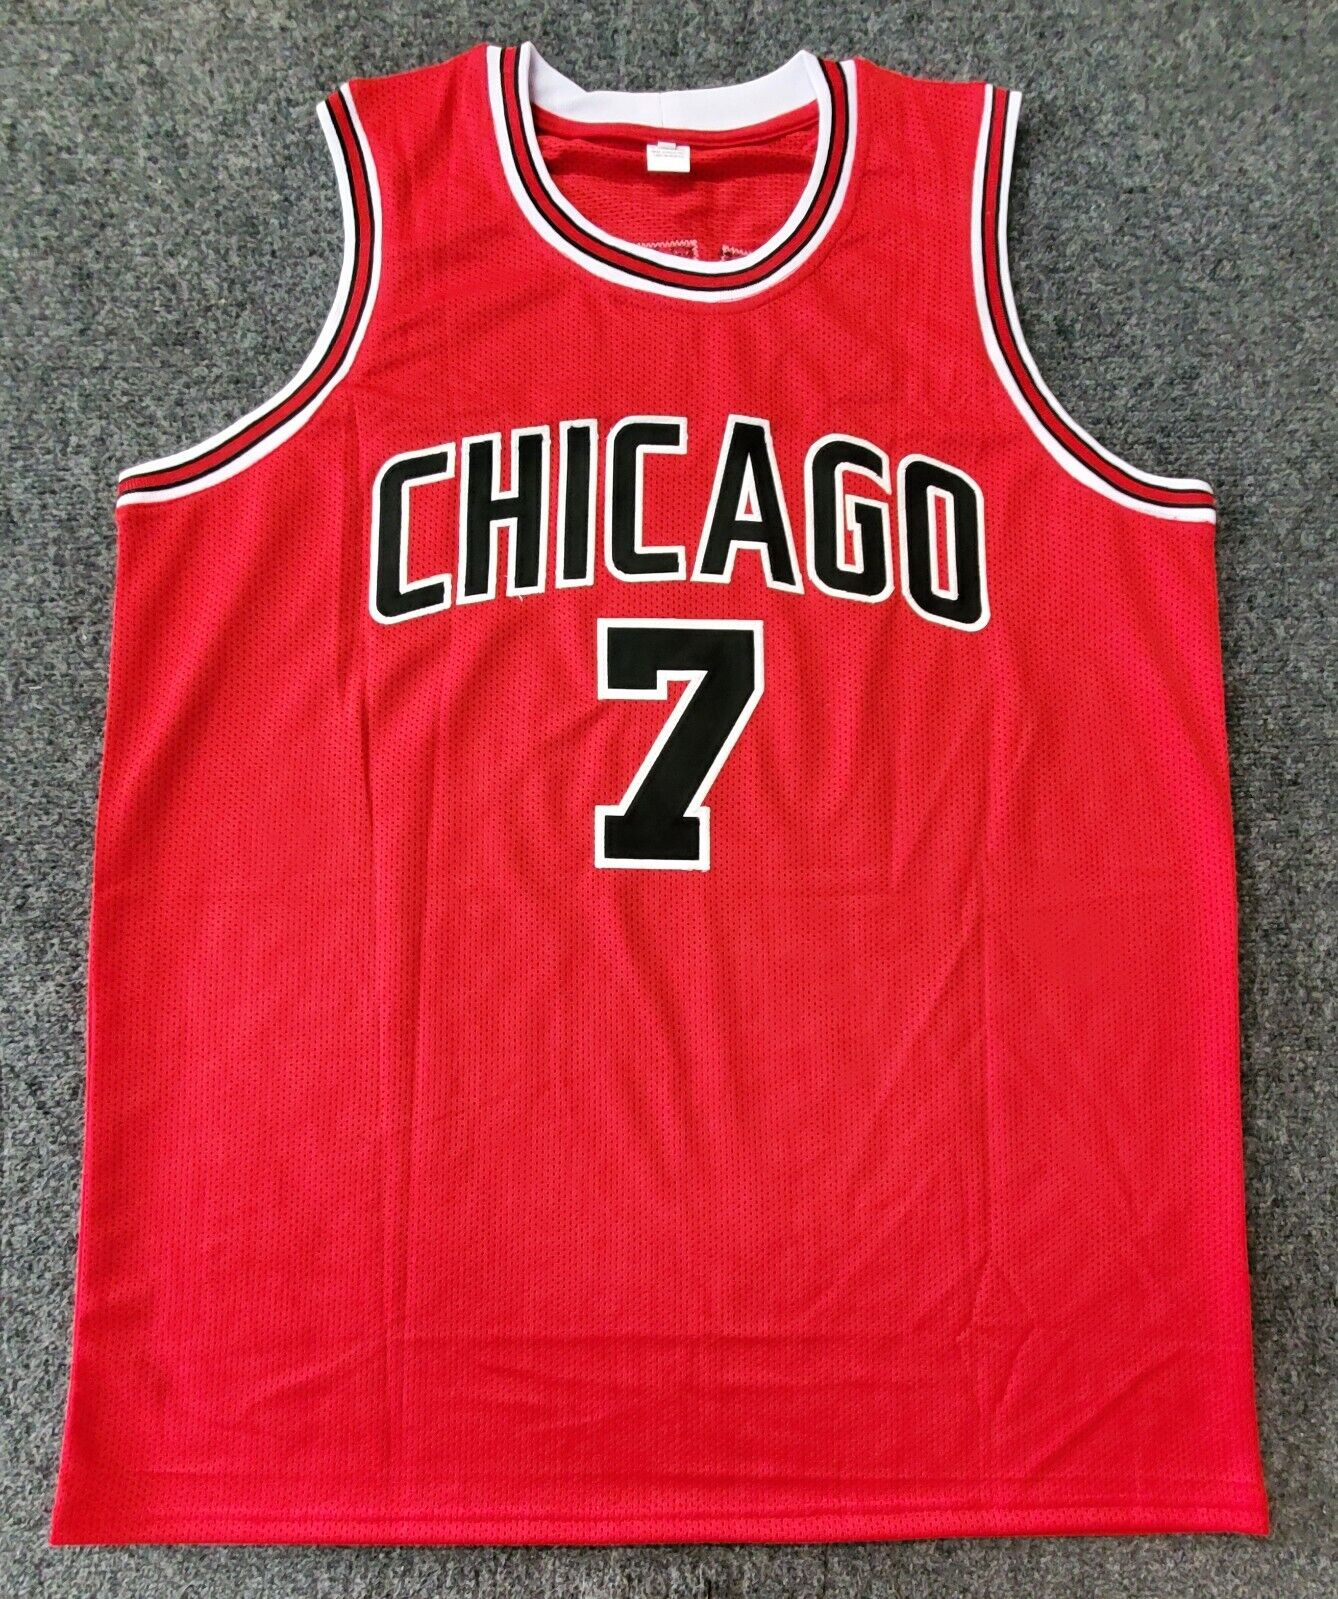 Chicago Bulls Tony Kukoc Autographed Signed Jersey Jsa Coa – MVP Authentics